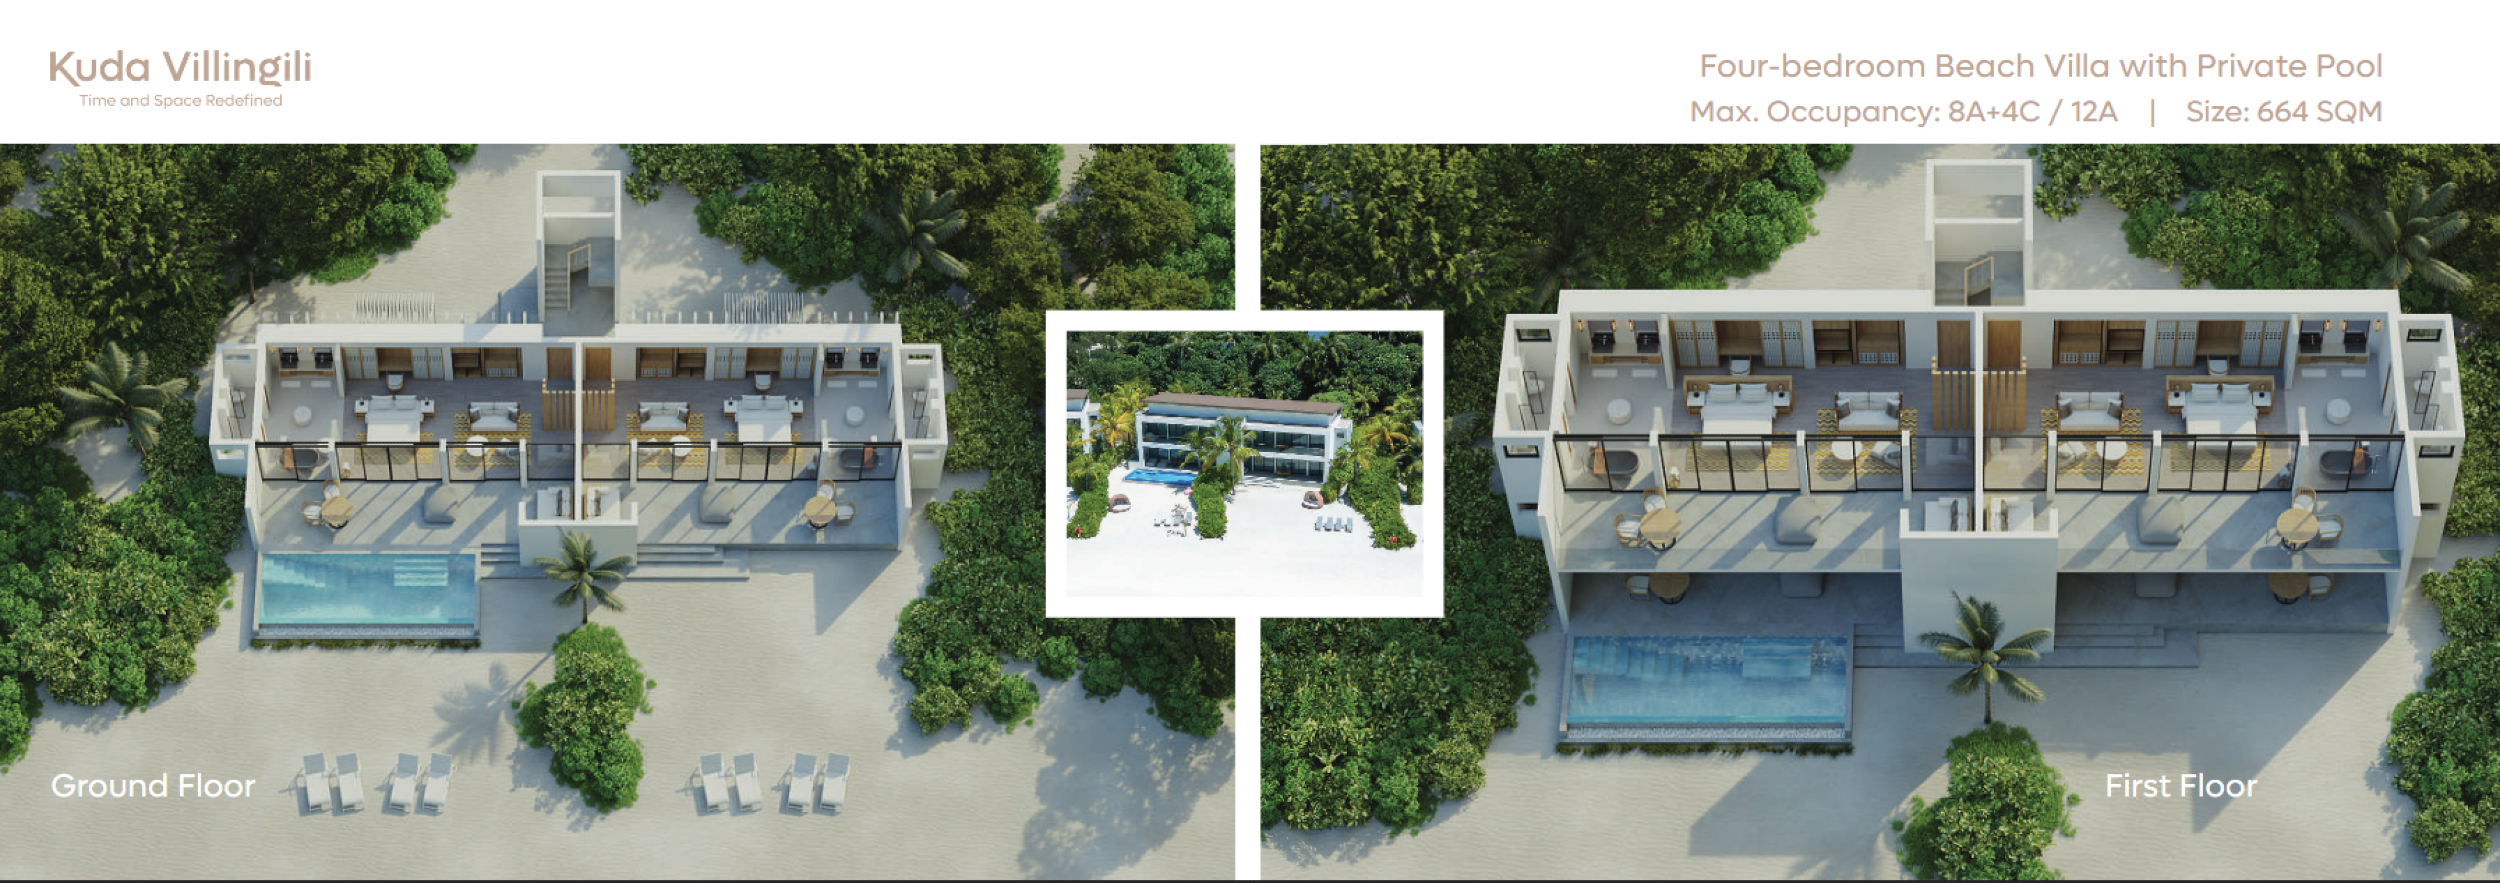 Four-bedroom Beach Villa with Private Pool - Floor map - Kuda Villingili Resort Maldives